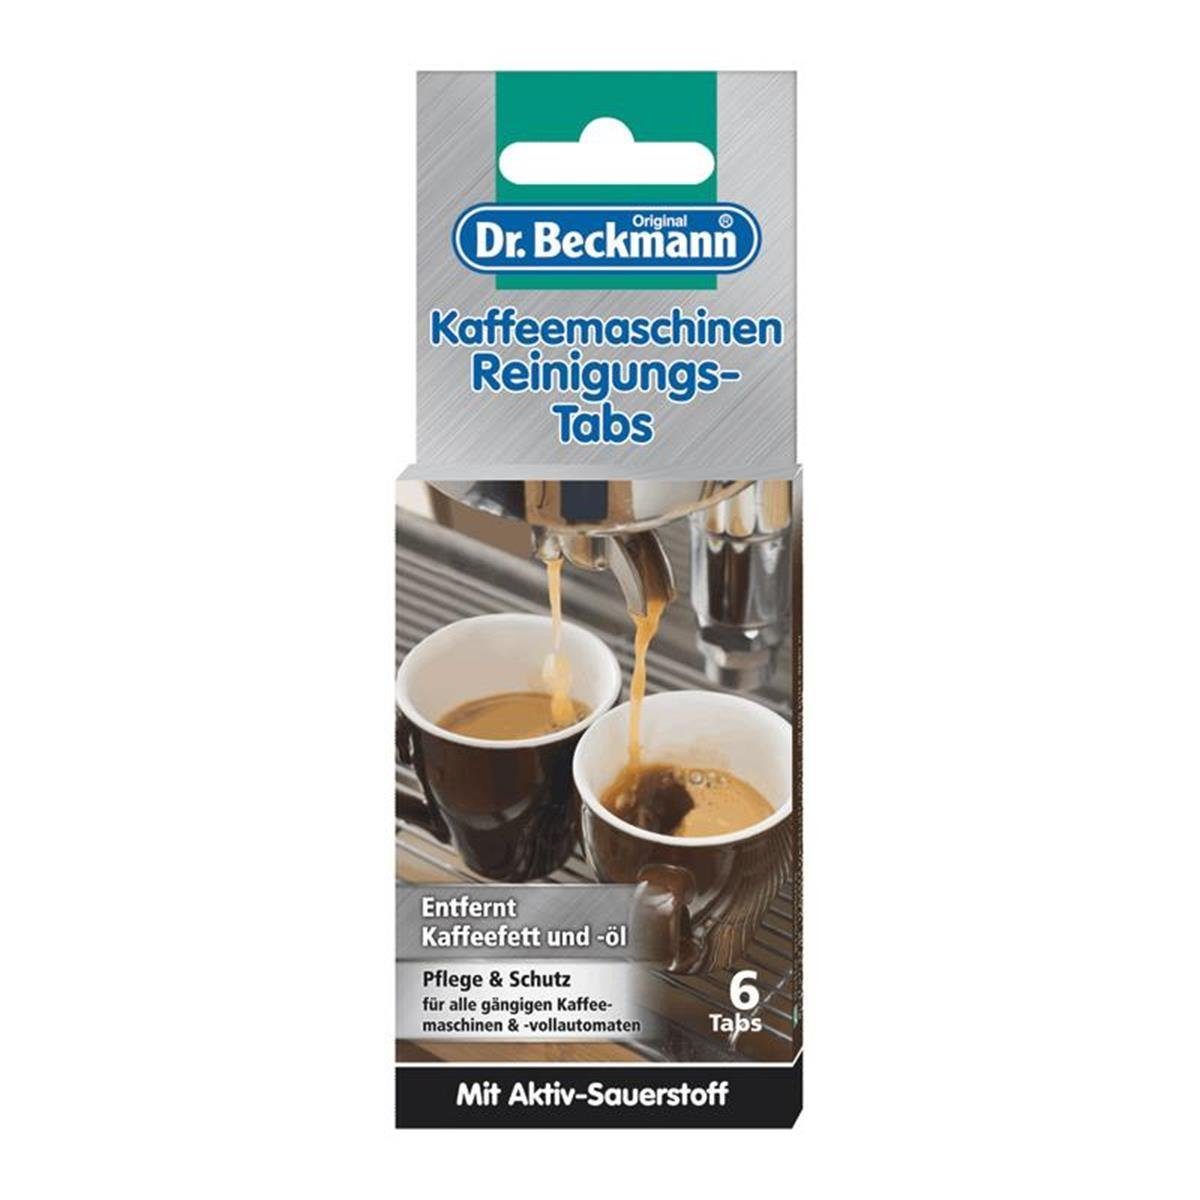 Dr. Beckmann Dr. Beckmann Kaffeemaschinen Reinigungs-Tabs 6 Tabs - Entfernt Kaffeef Reinigungstabletten